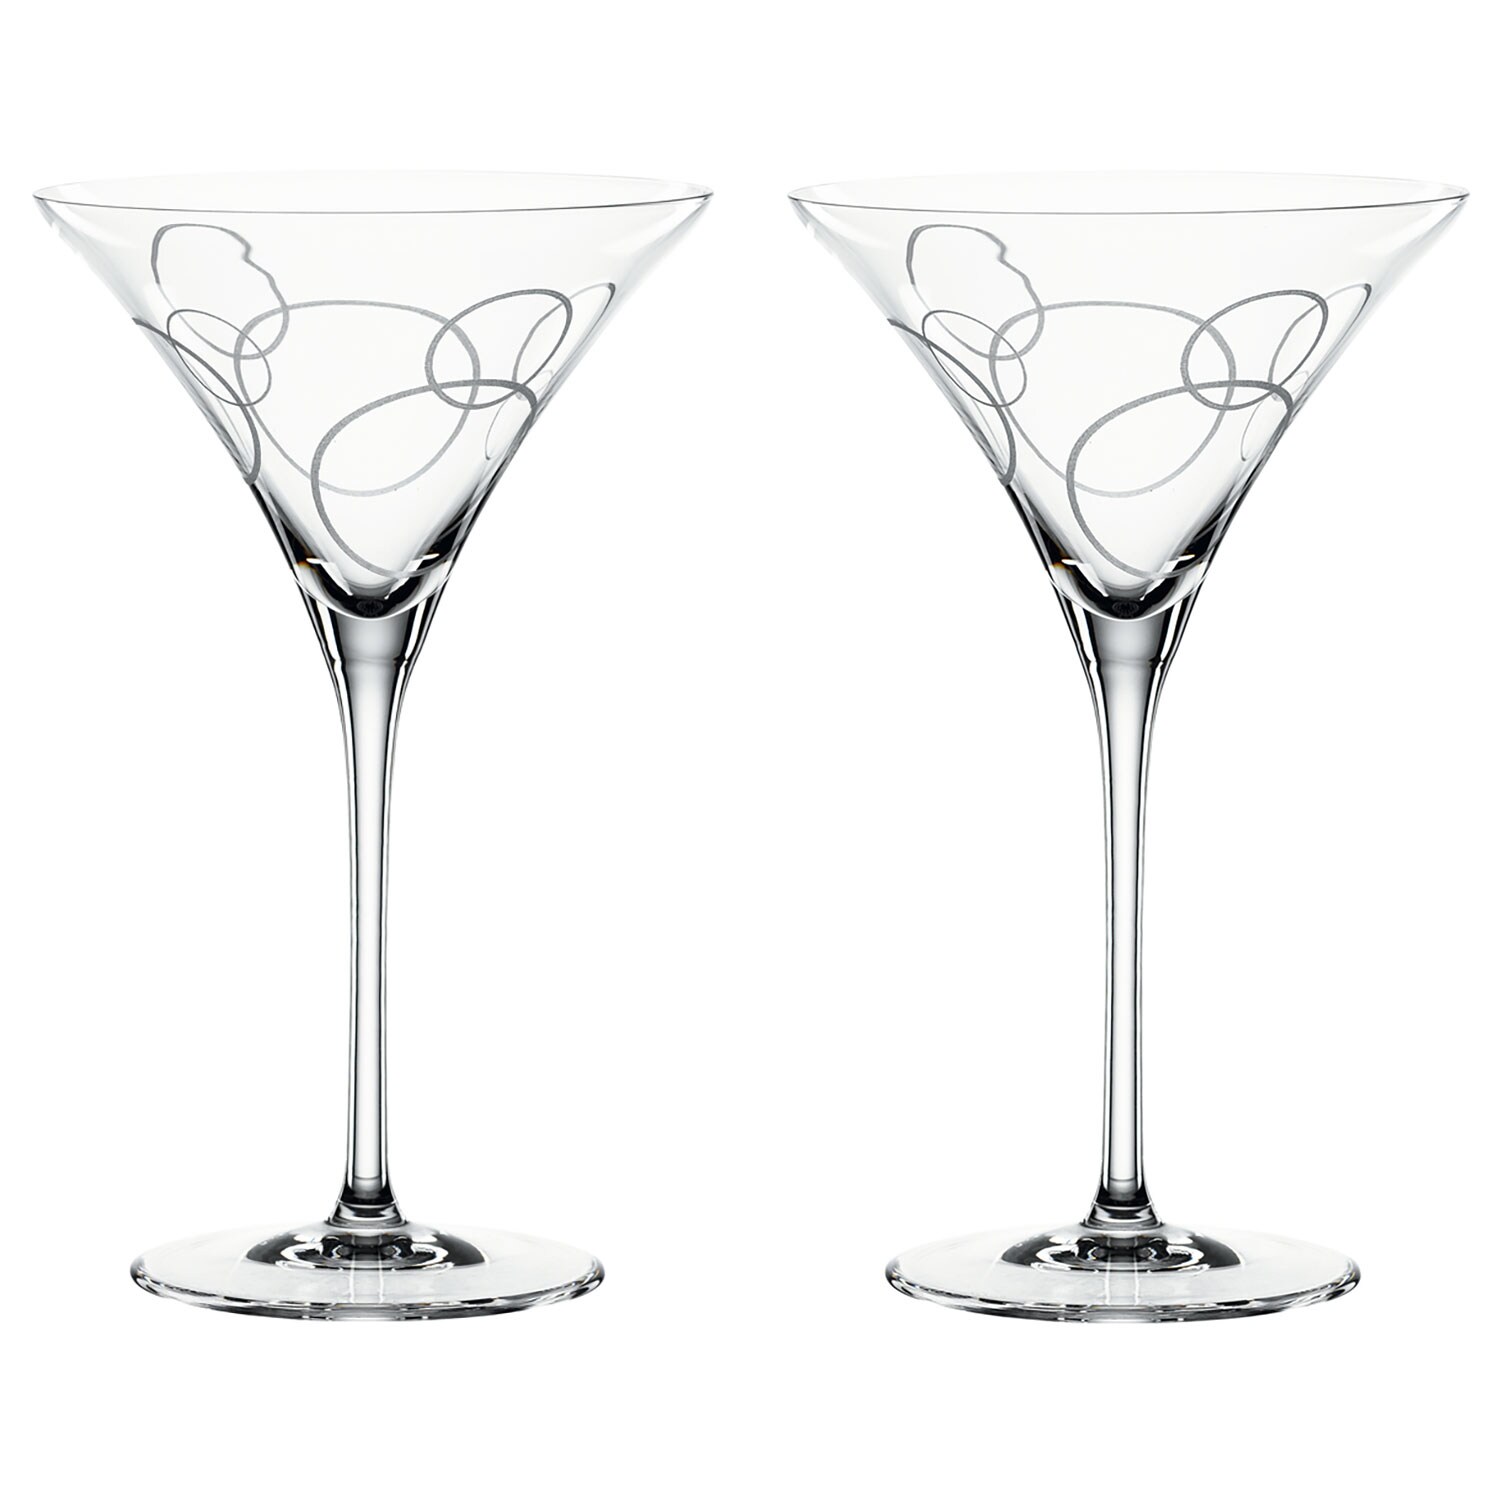 https://royaldesign.com/image/11/spiegelau-signature-cocktail-glasses-22-cl-2-pack-1